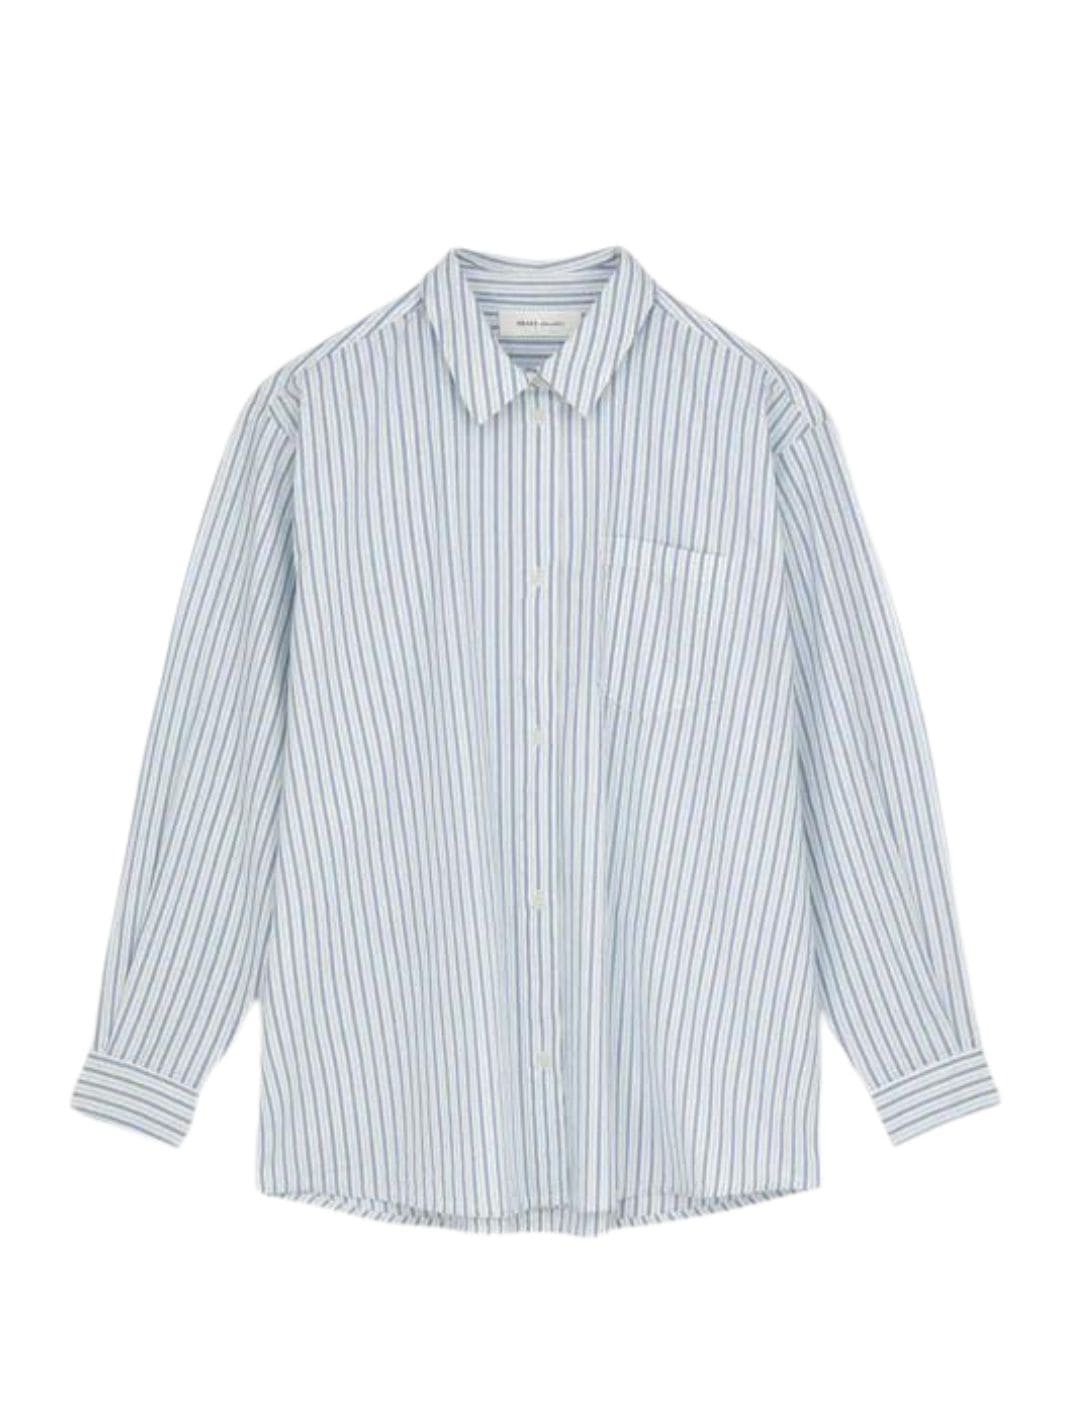 Skall Studio Shirts Skjorte | Edgar Shirt Blue/White Stripe